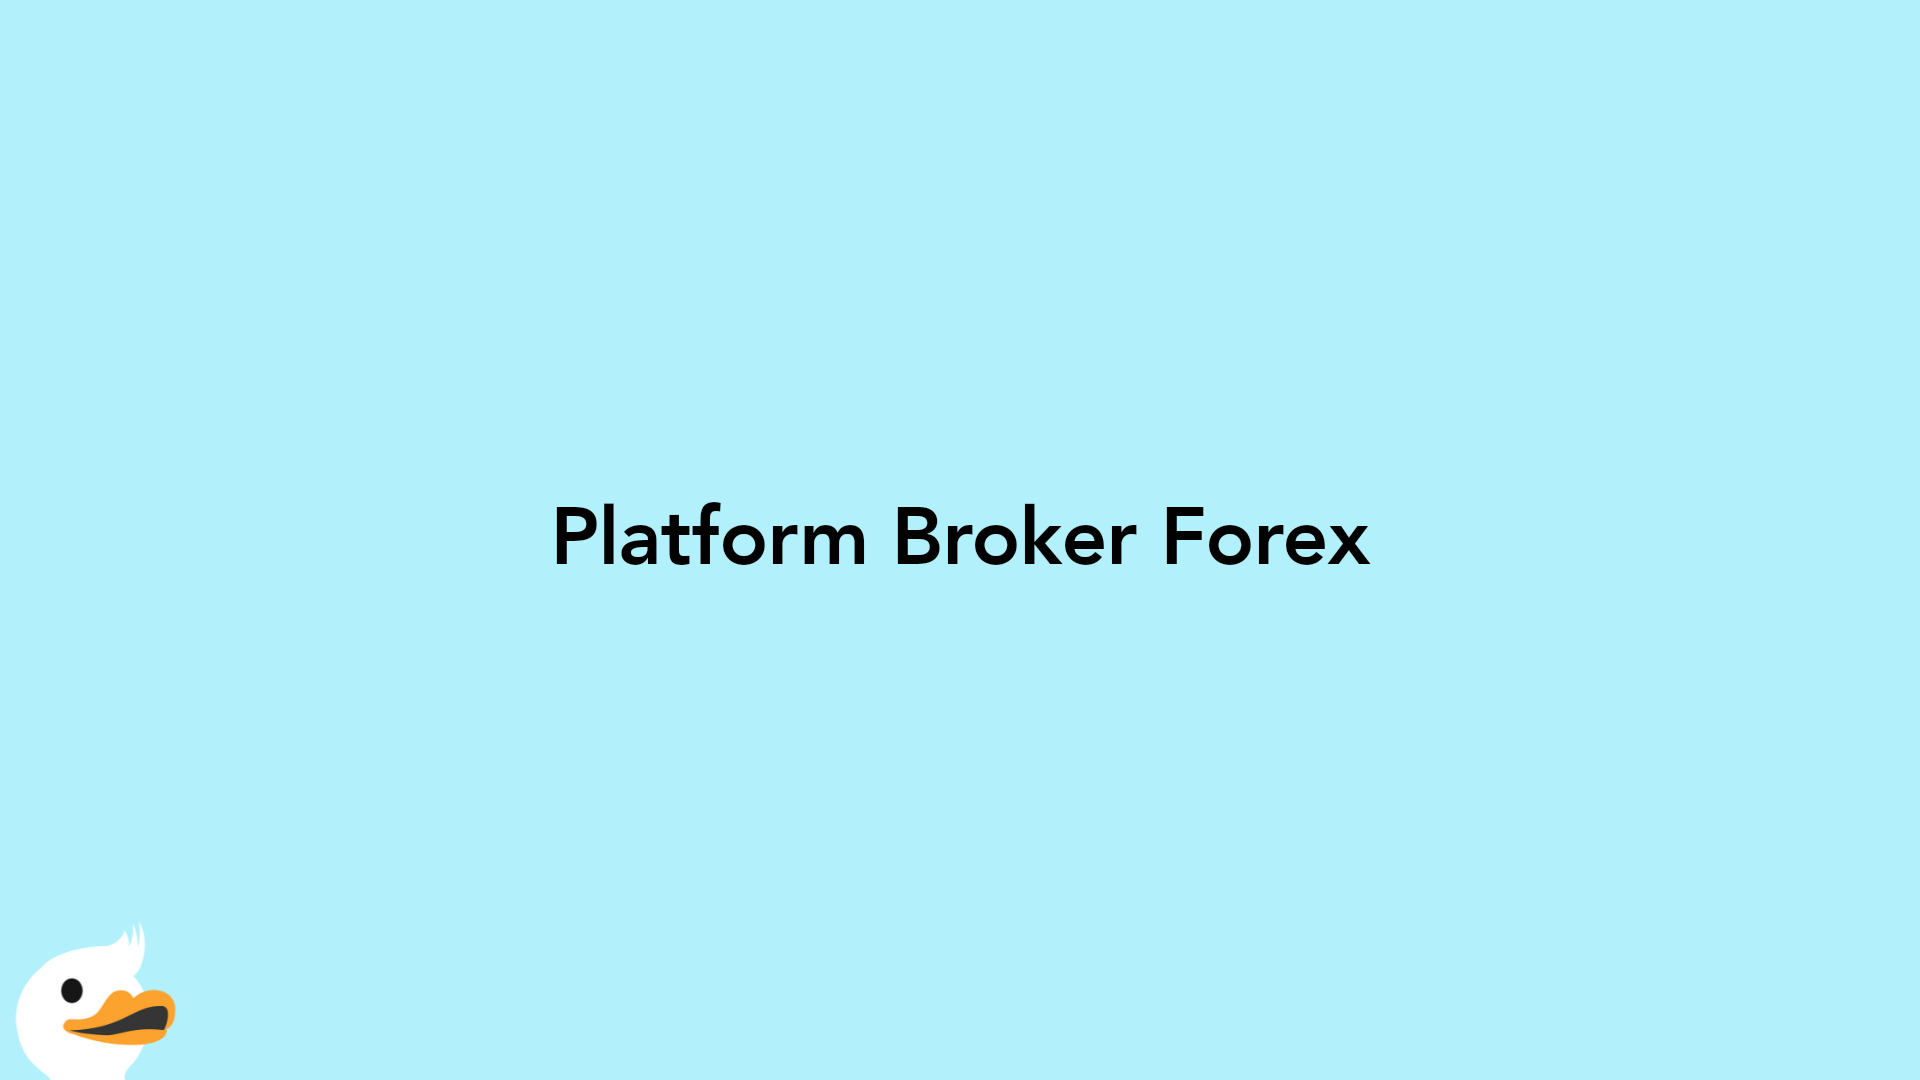 Platform Broker Forex